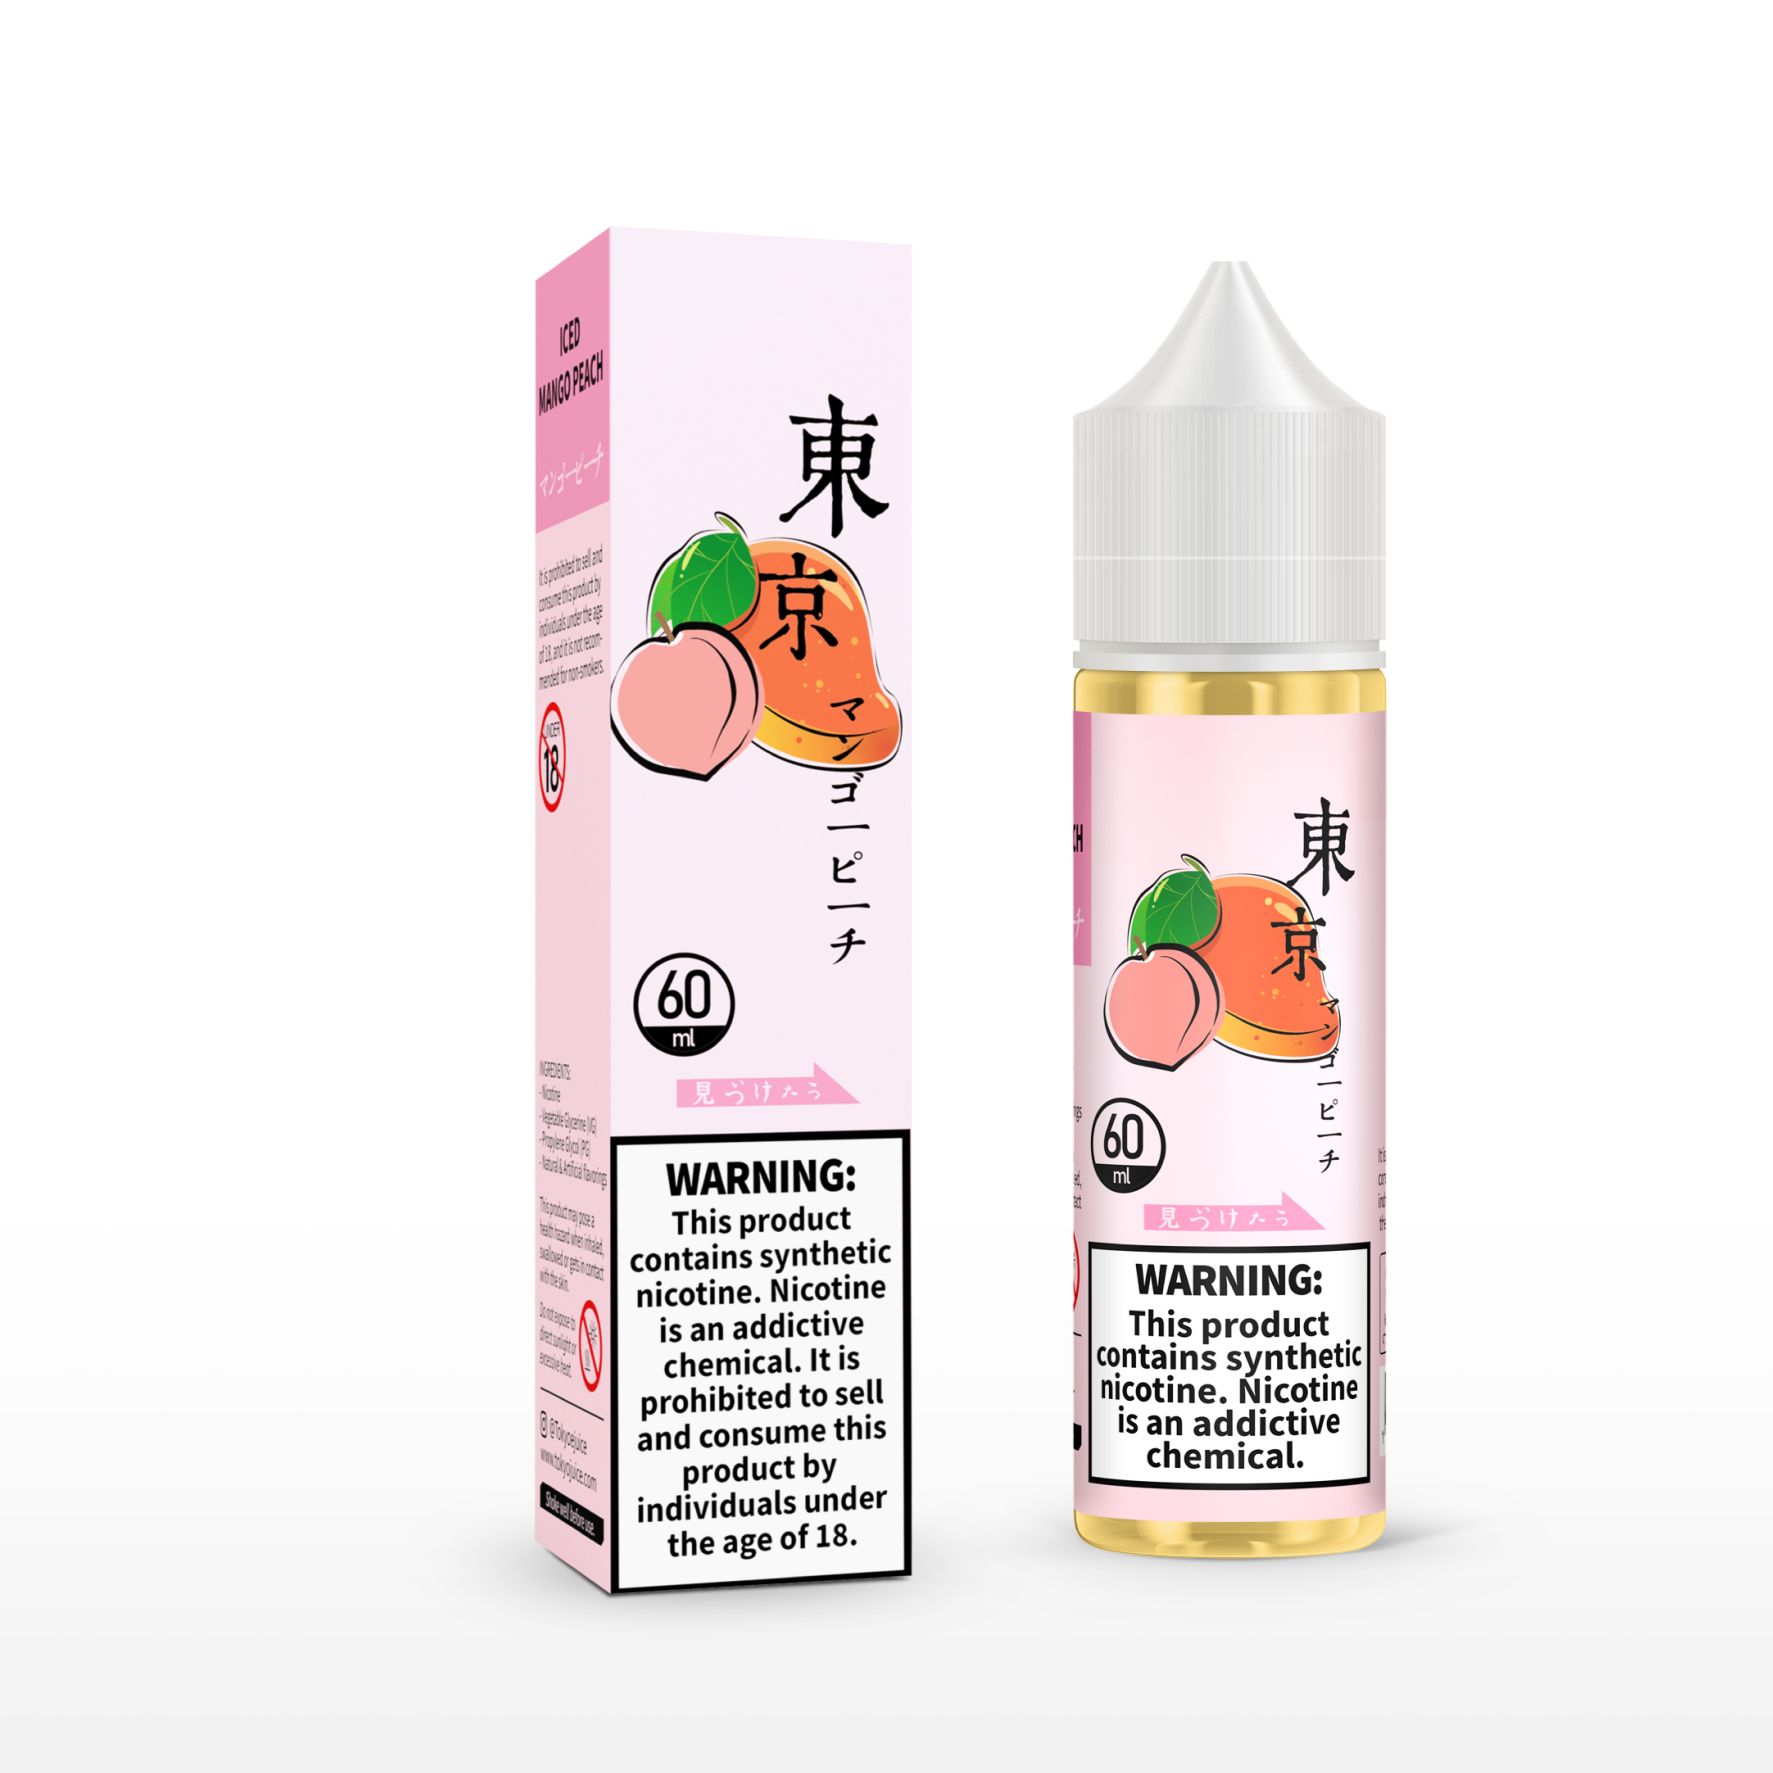 Iced Mango Peach by TOKYO E-liquid - Tropical Fruits and Refreshing Ice.